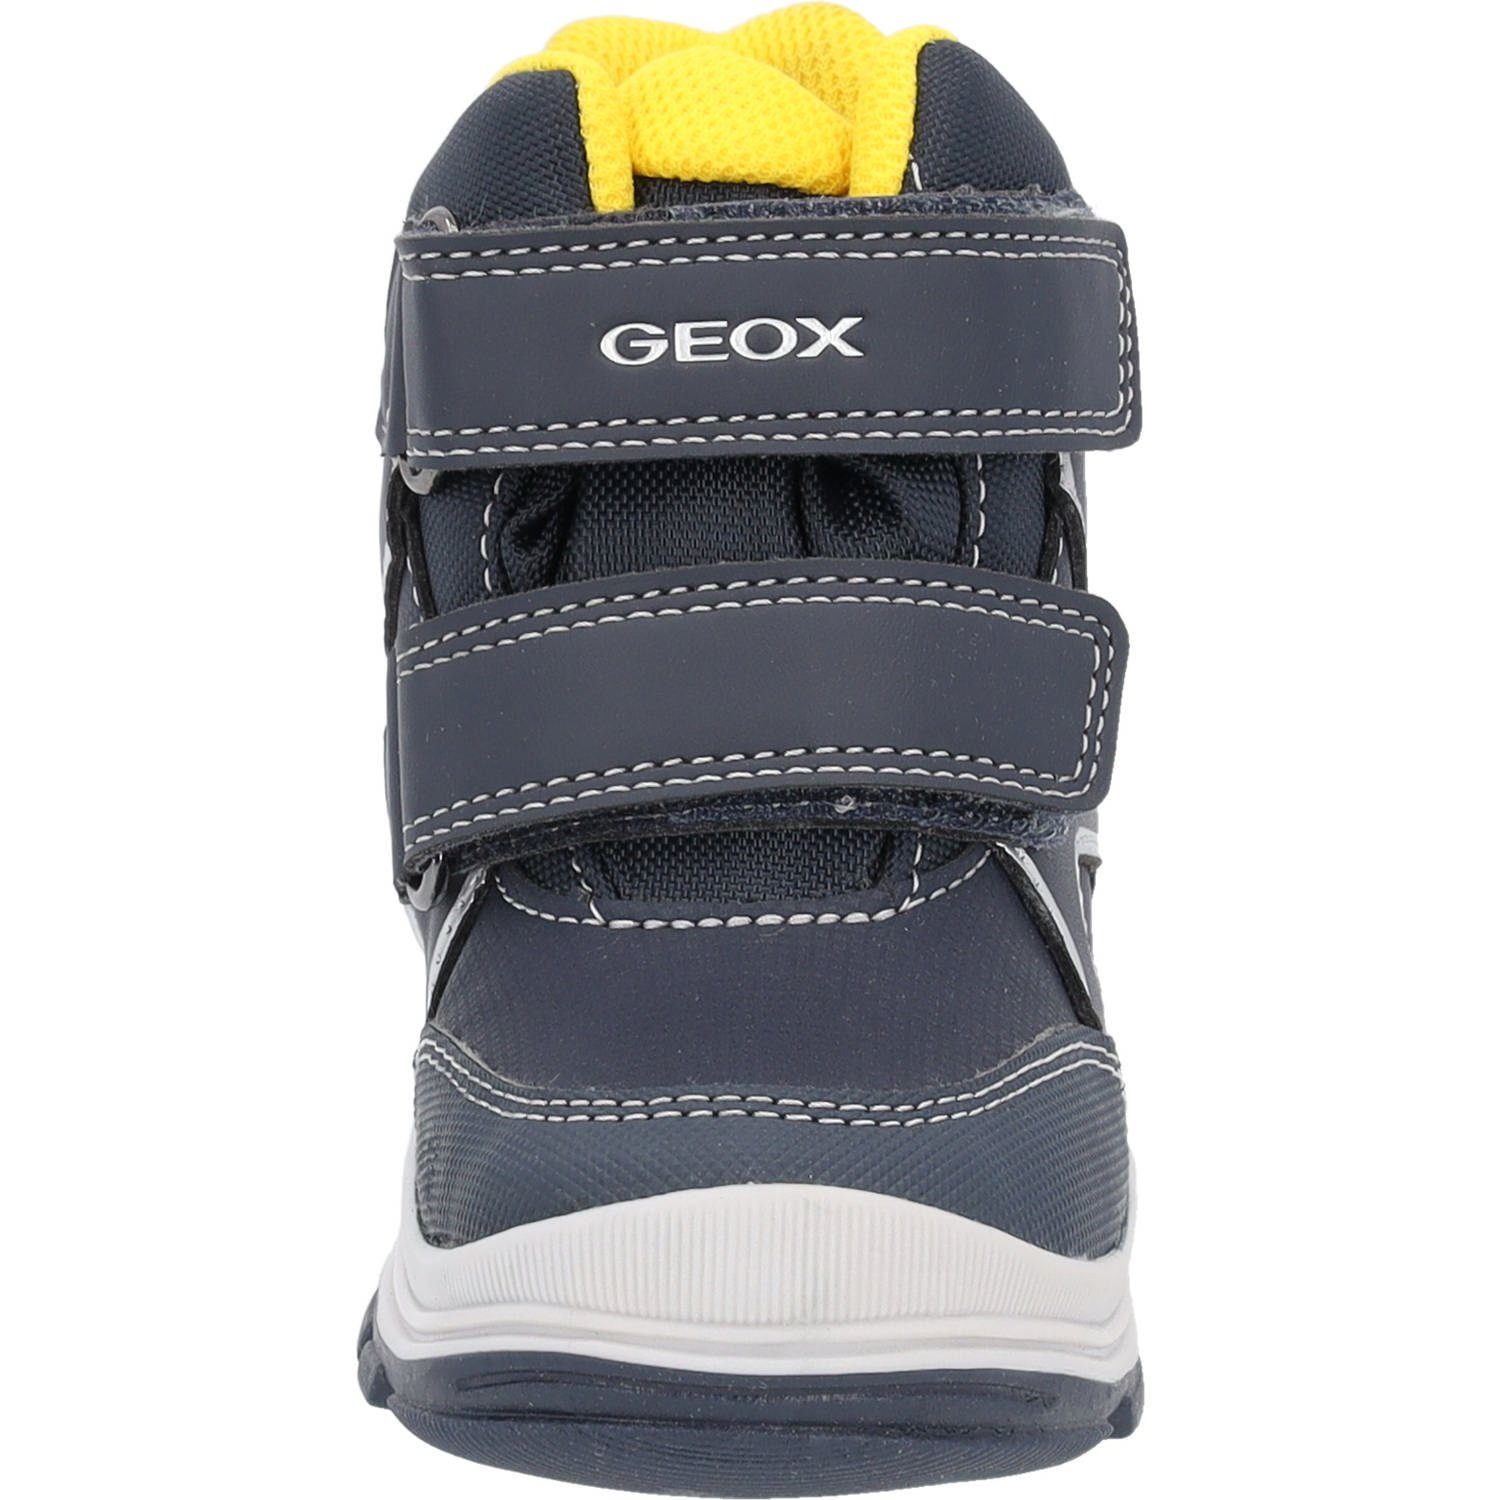 Geox Geox navy/yellow (07101986) Stiefel B263VD